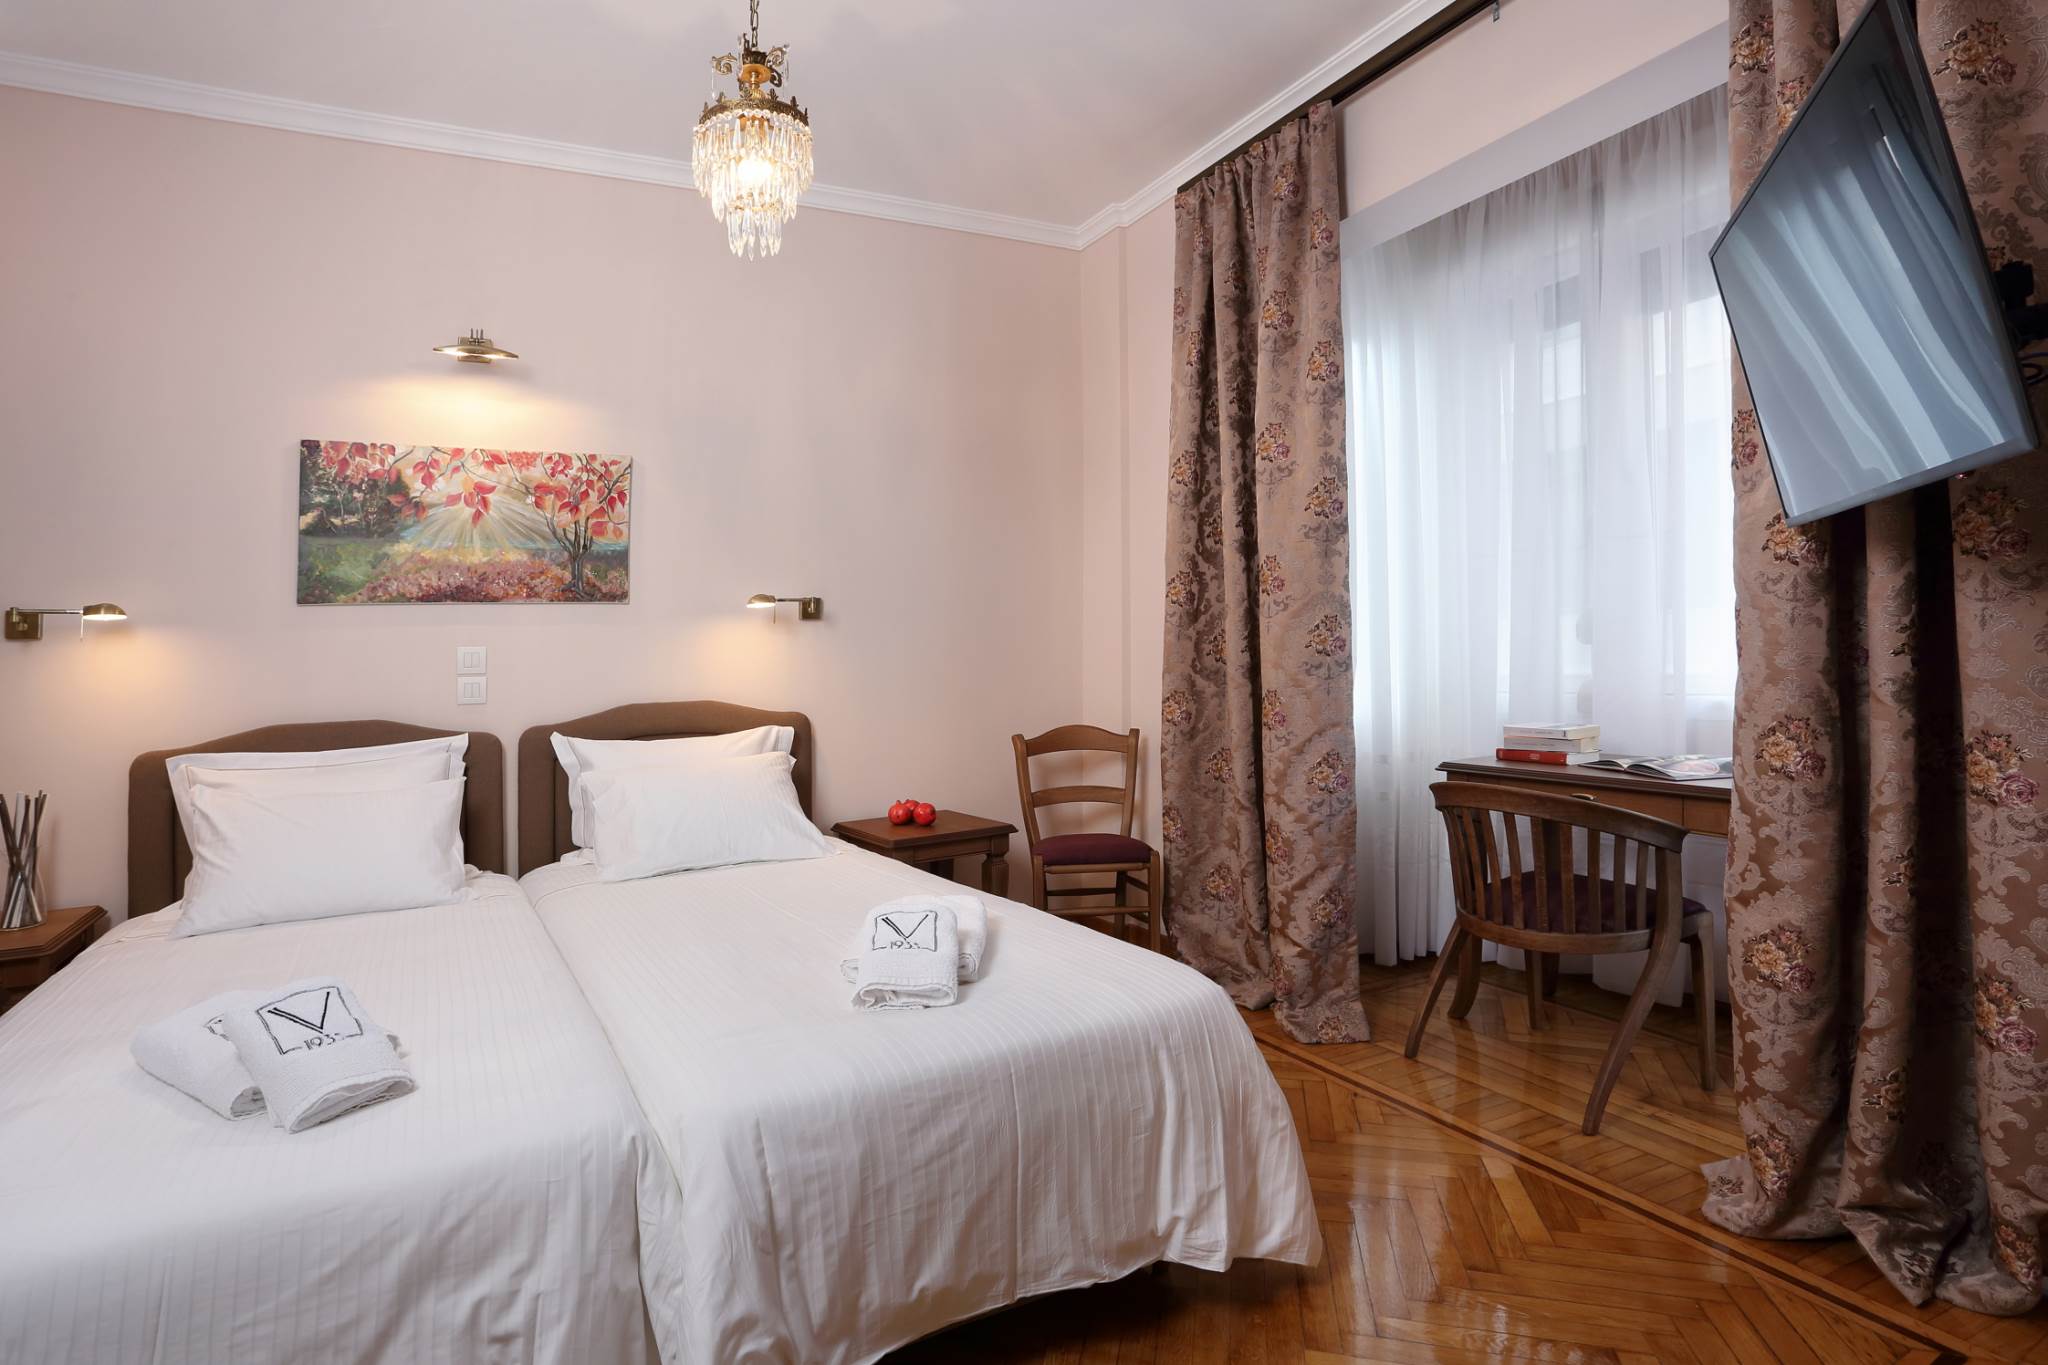 V1935 C1 Fully renovated one bedroom apt 1min to Syntagm...